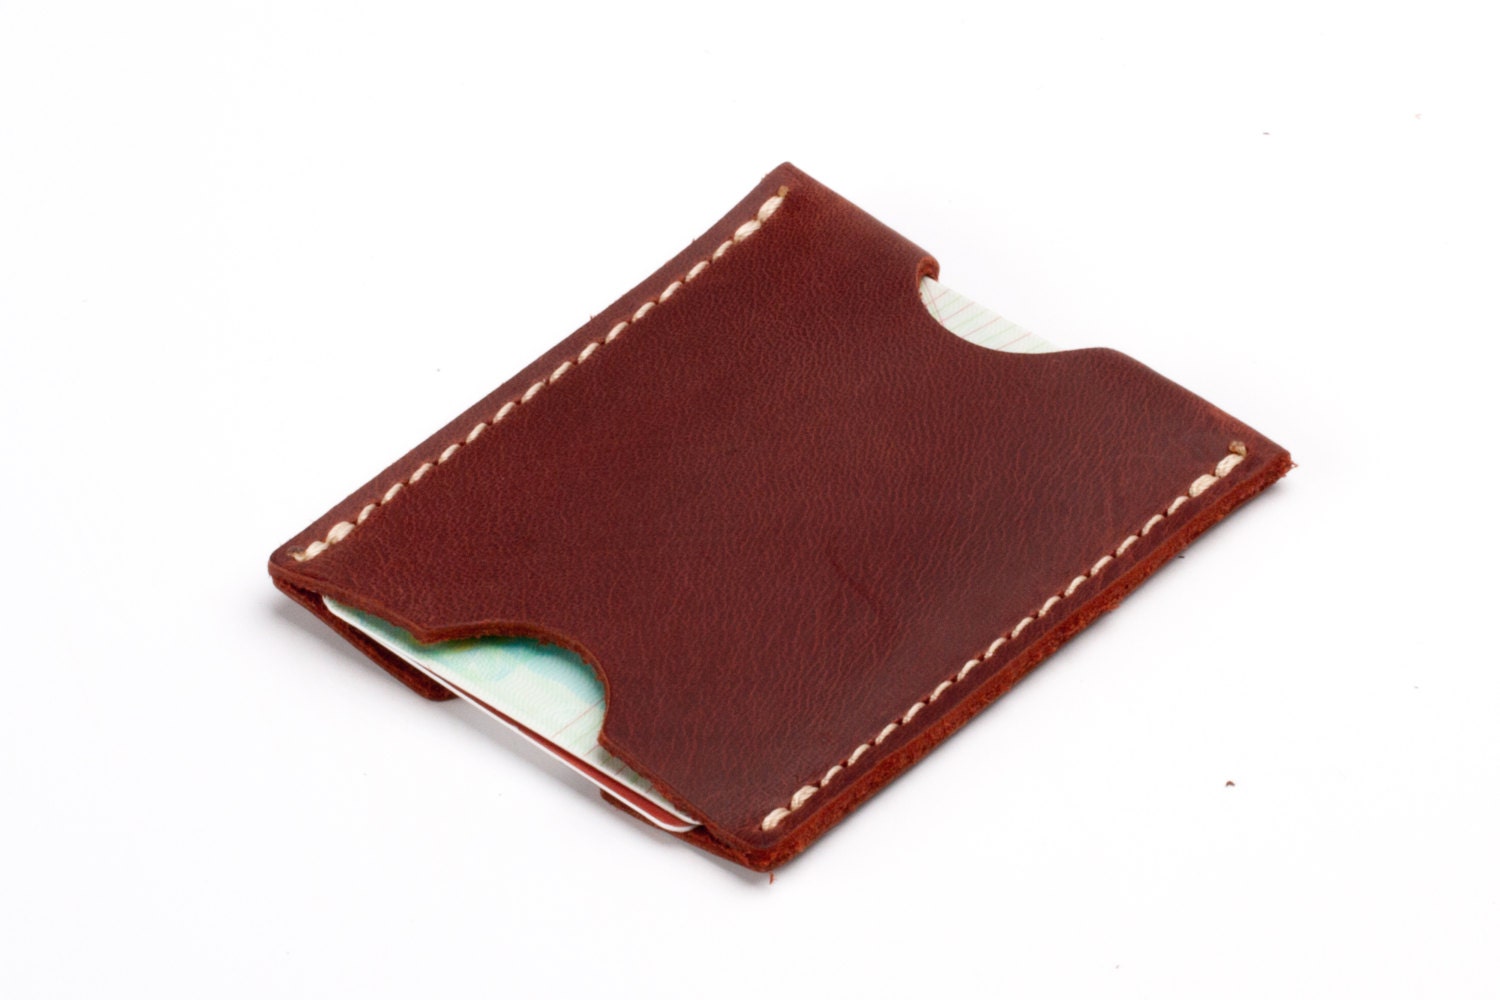 Leather Card Holder Wallet, Leather Sleeve Card Wallet, Business Card Holder, Groomsmen Gift, Credit Card Holder, Valentine's Day sale - 30%